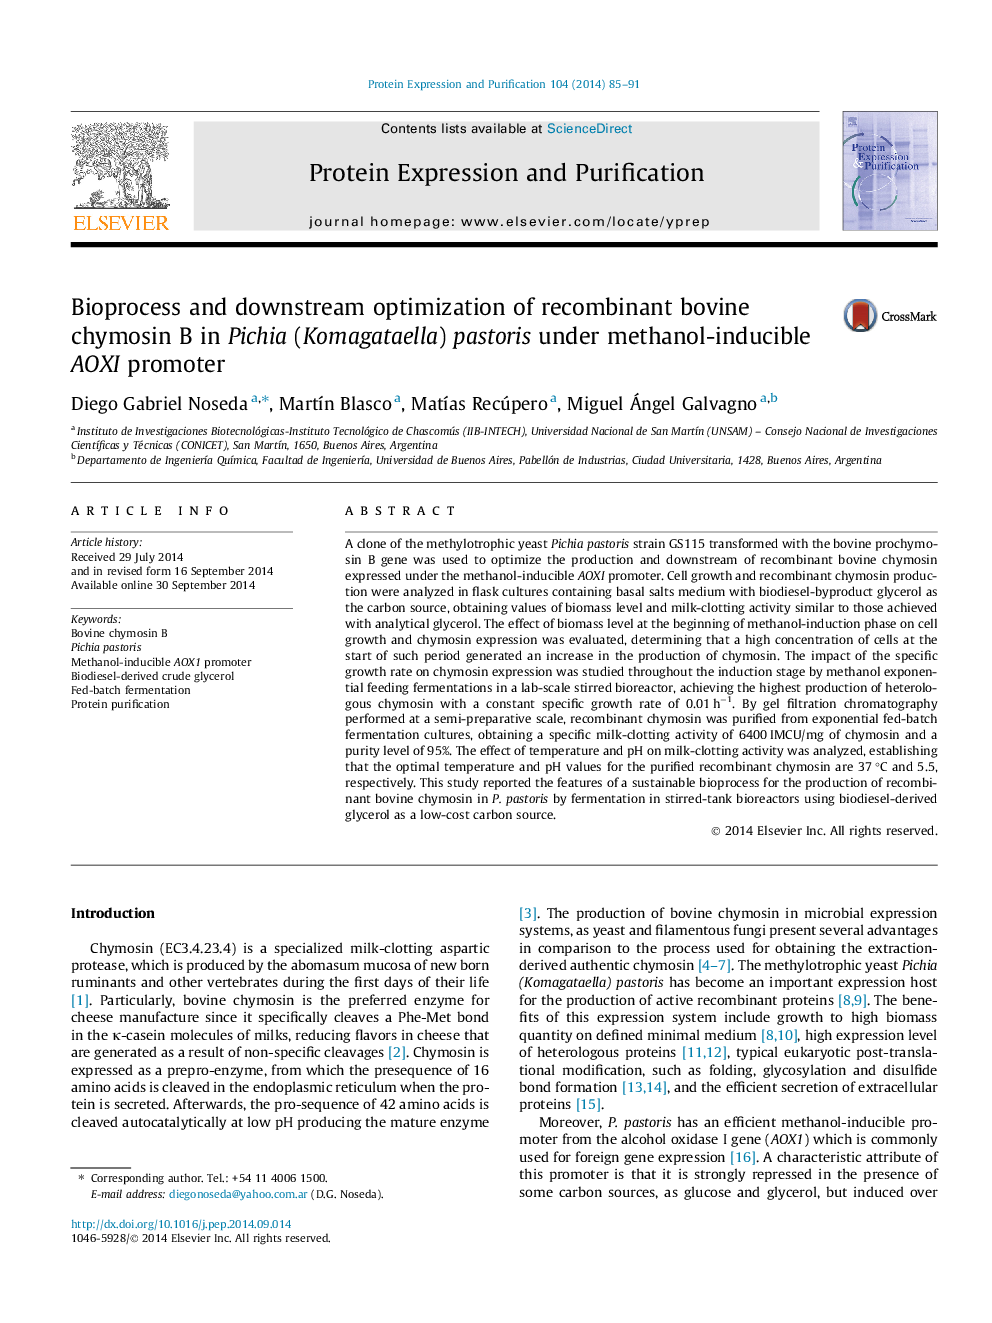 Bioprocess and downstream optimization of recombinant bovine chymosin B in Pichia (Komagataella) pastoris under methanol-inducible AOXI promoter